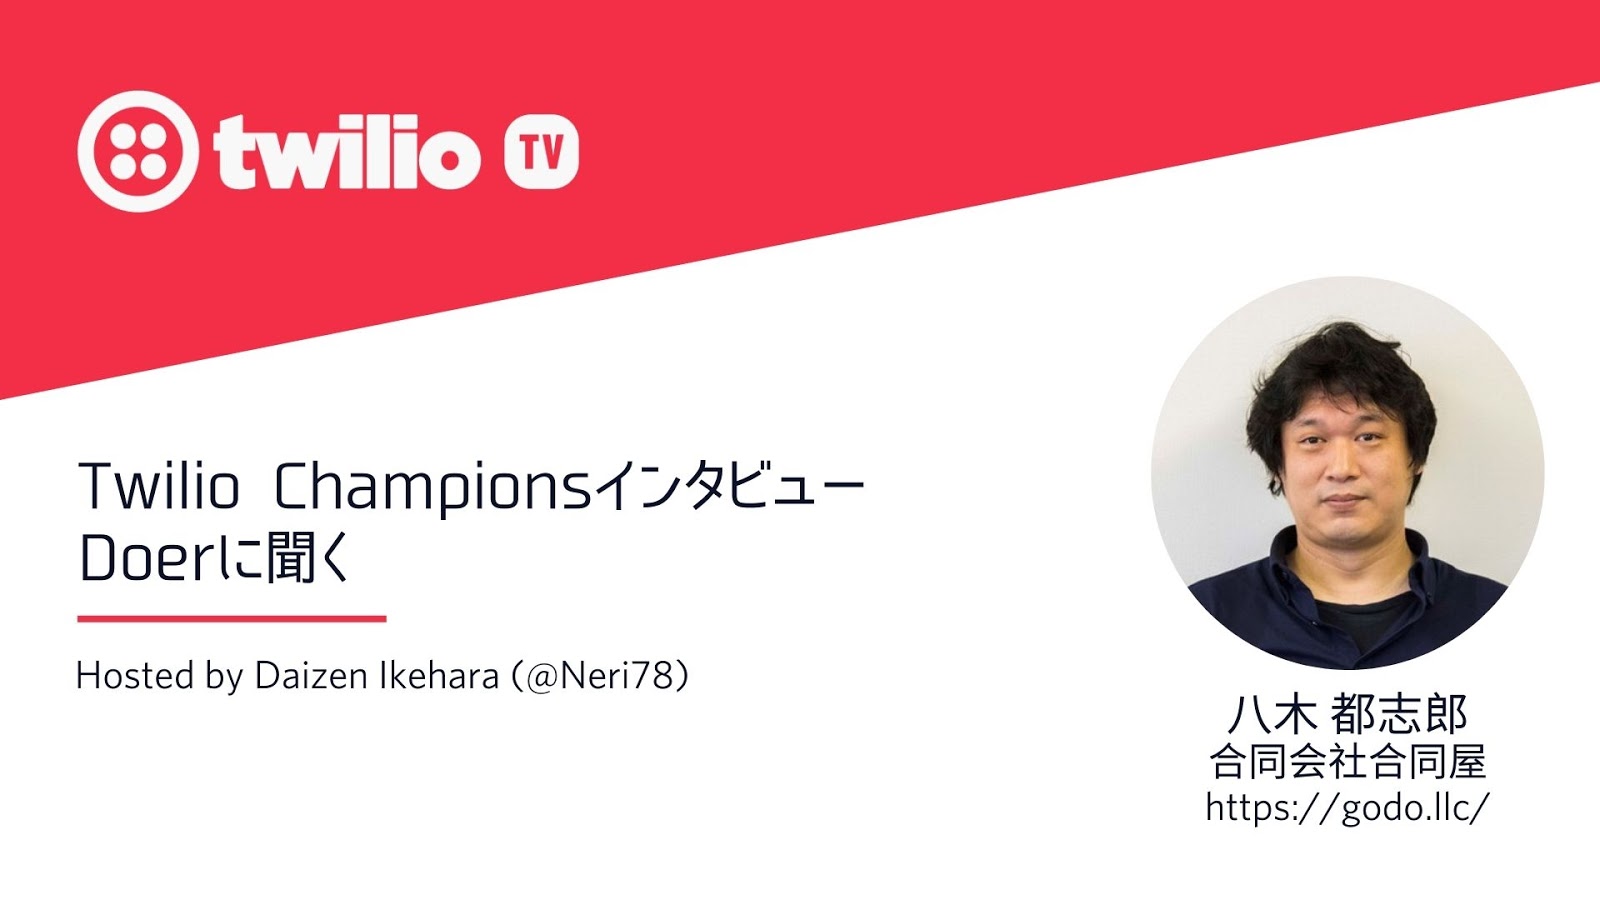 Twilio Champion - Tohiro Yagi